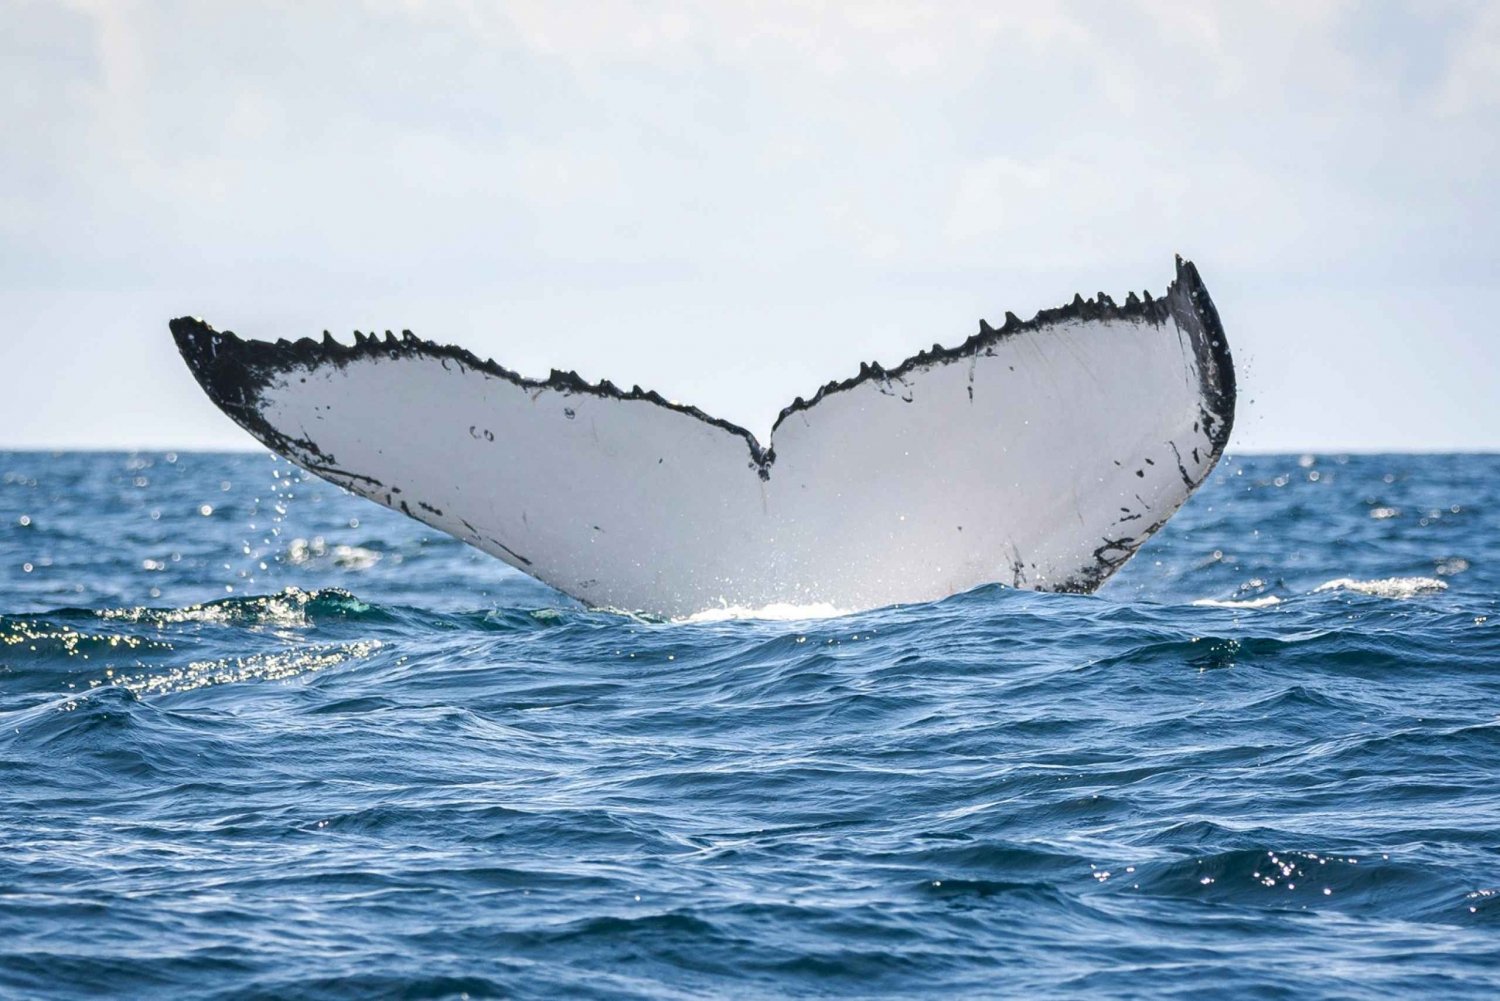 Gold Coast: Swim with Whales